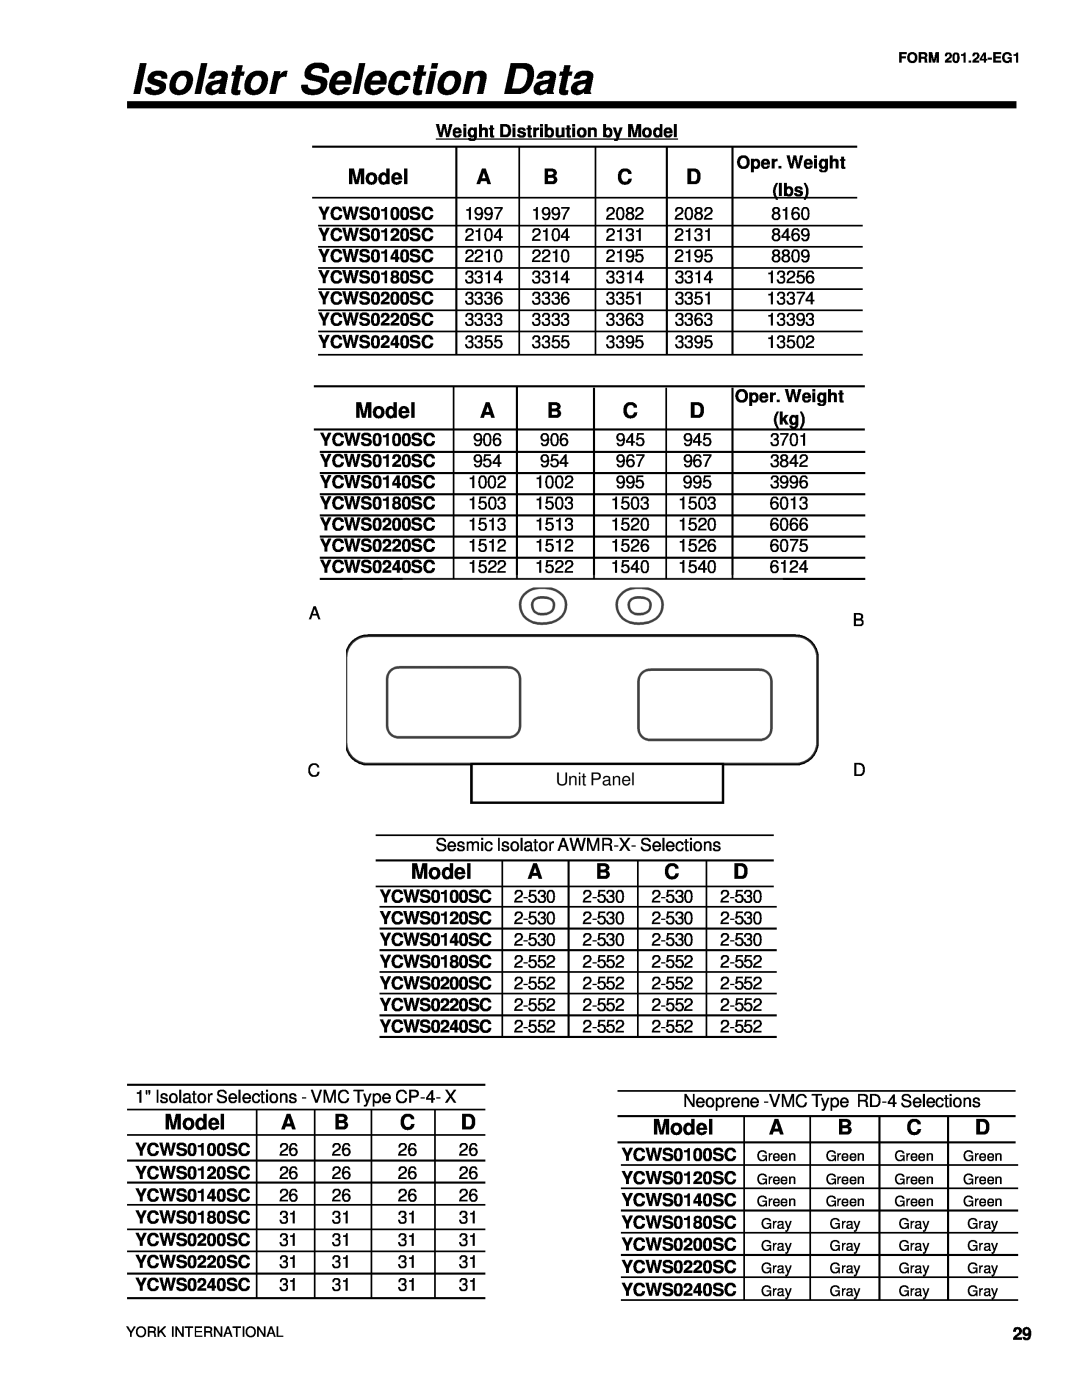 York YCWS manual Isolator Selection Data, Model 